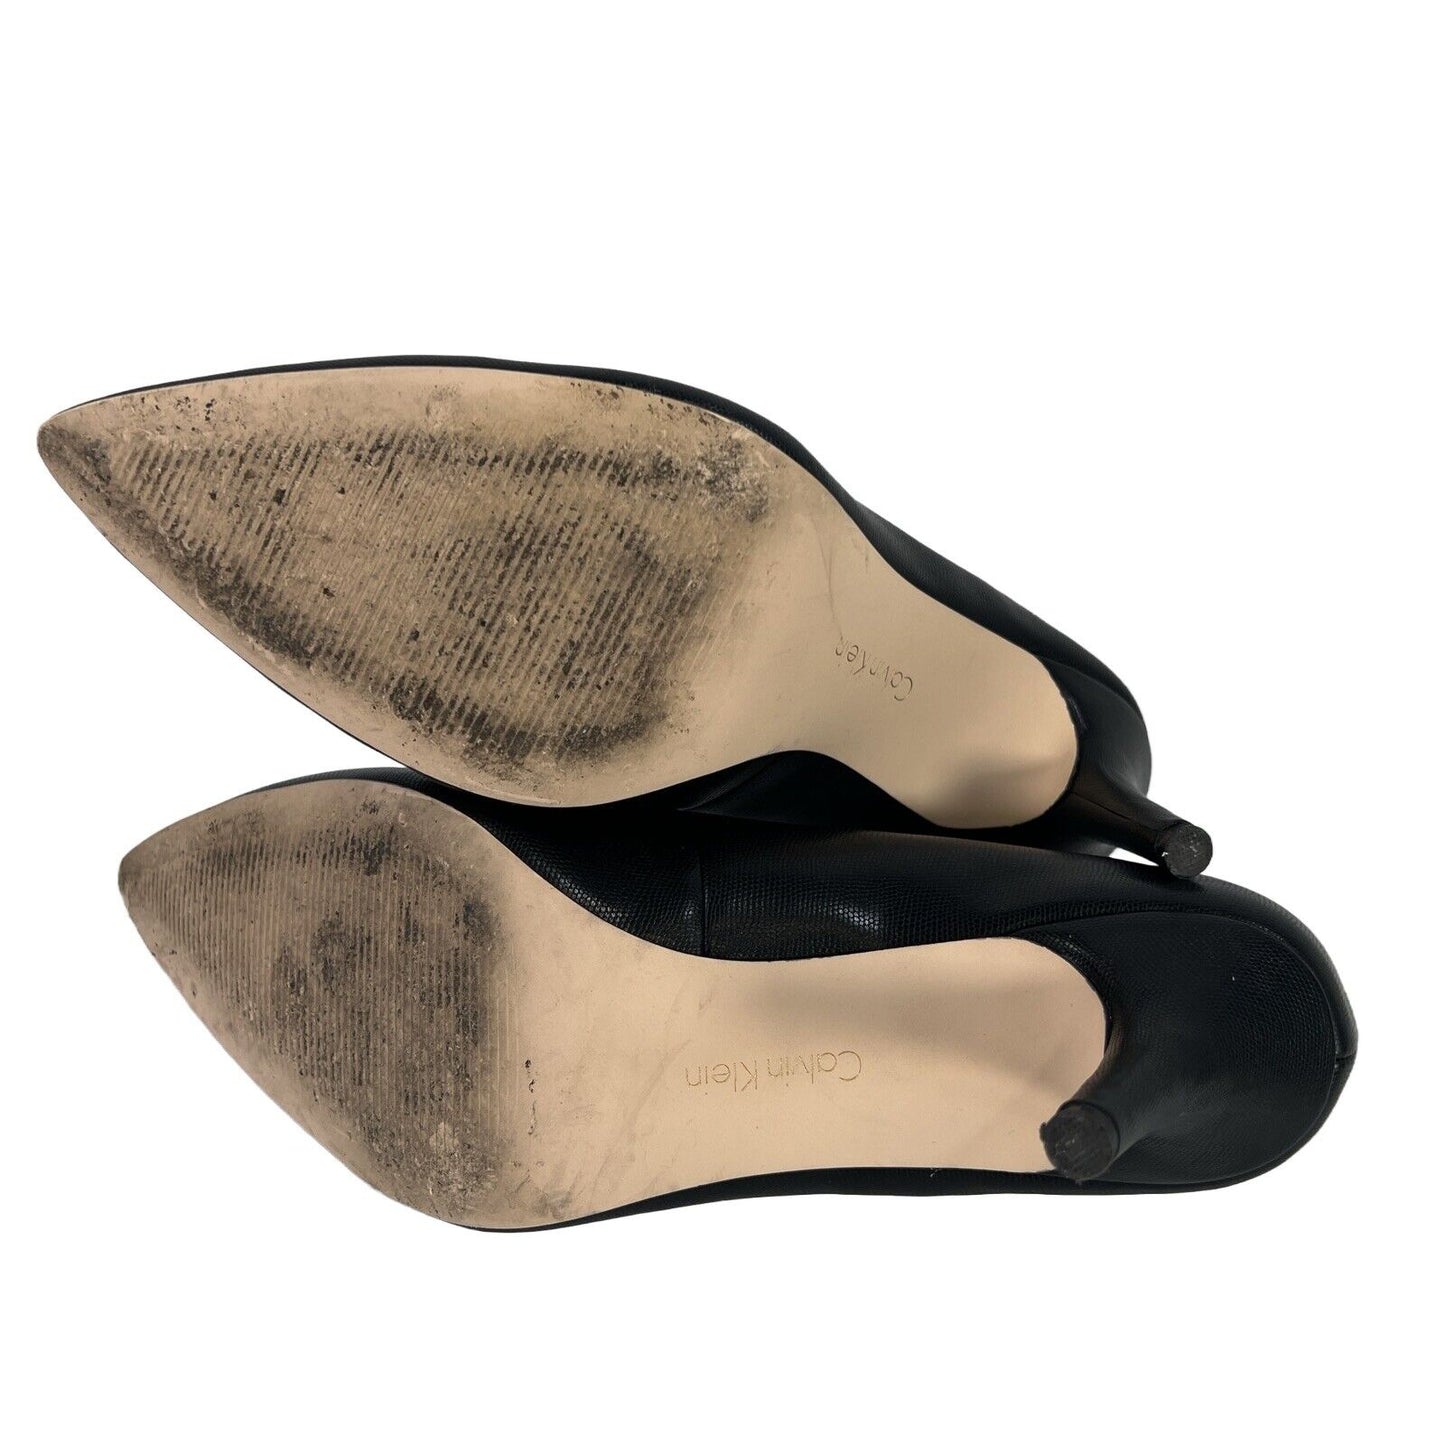 Calvin Klein Women's Black Kimberly Textile Pointed Toe Heels - 10